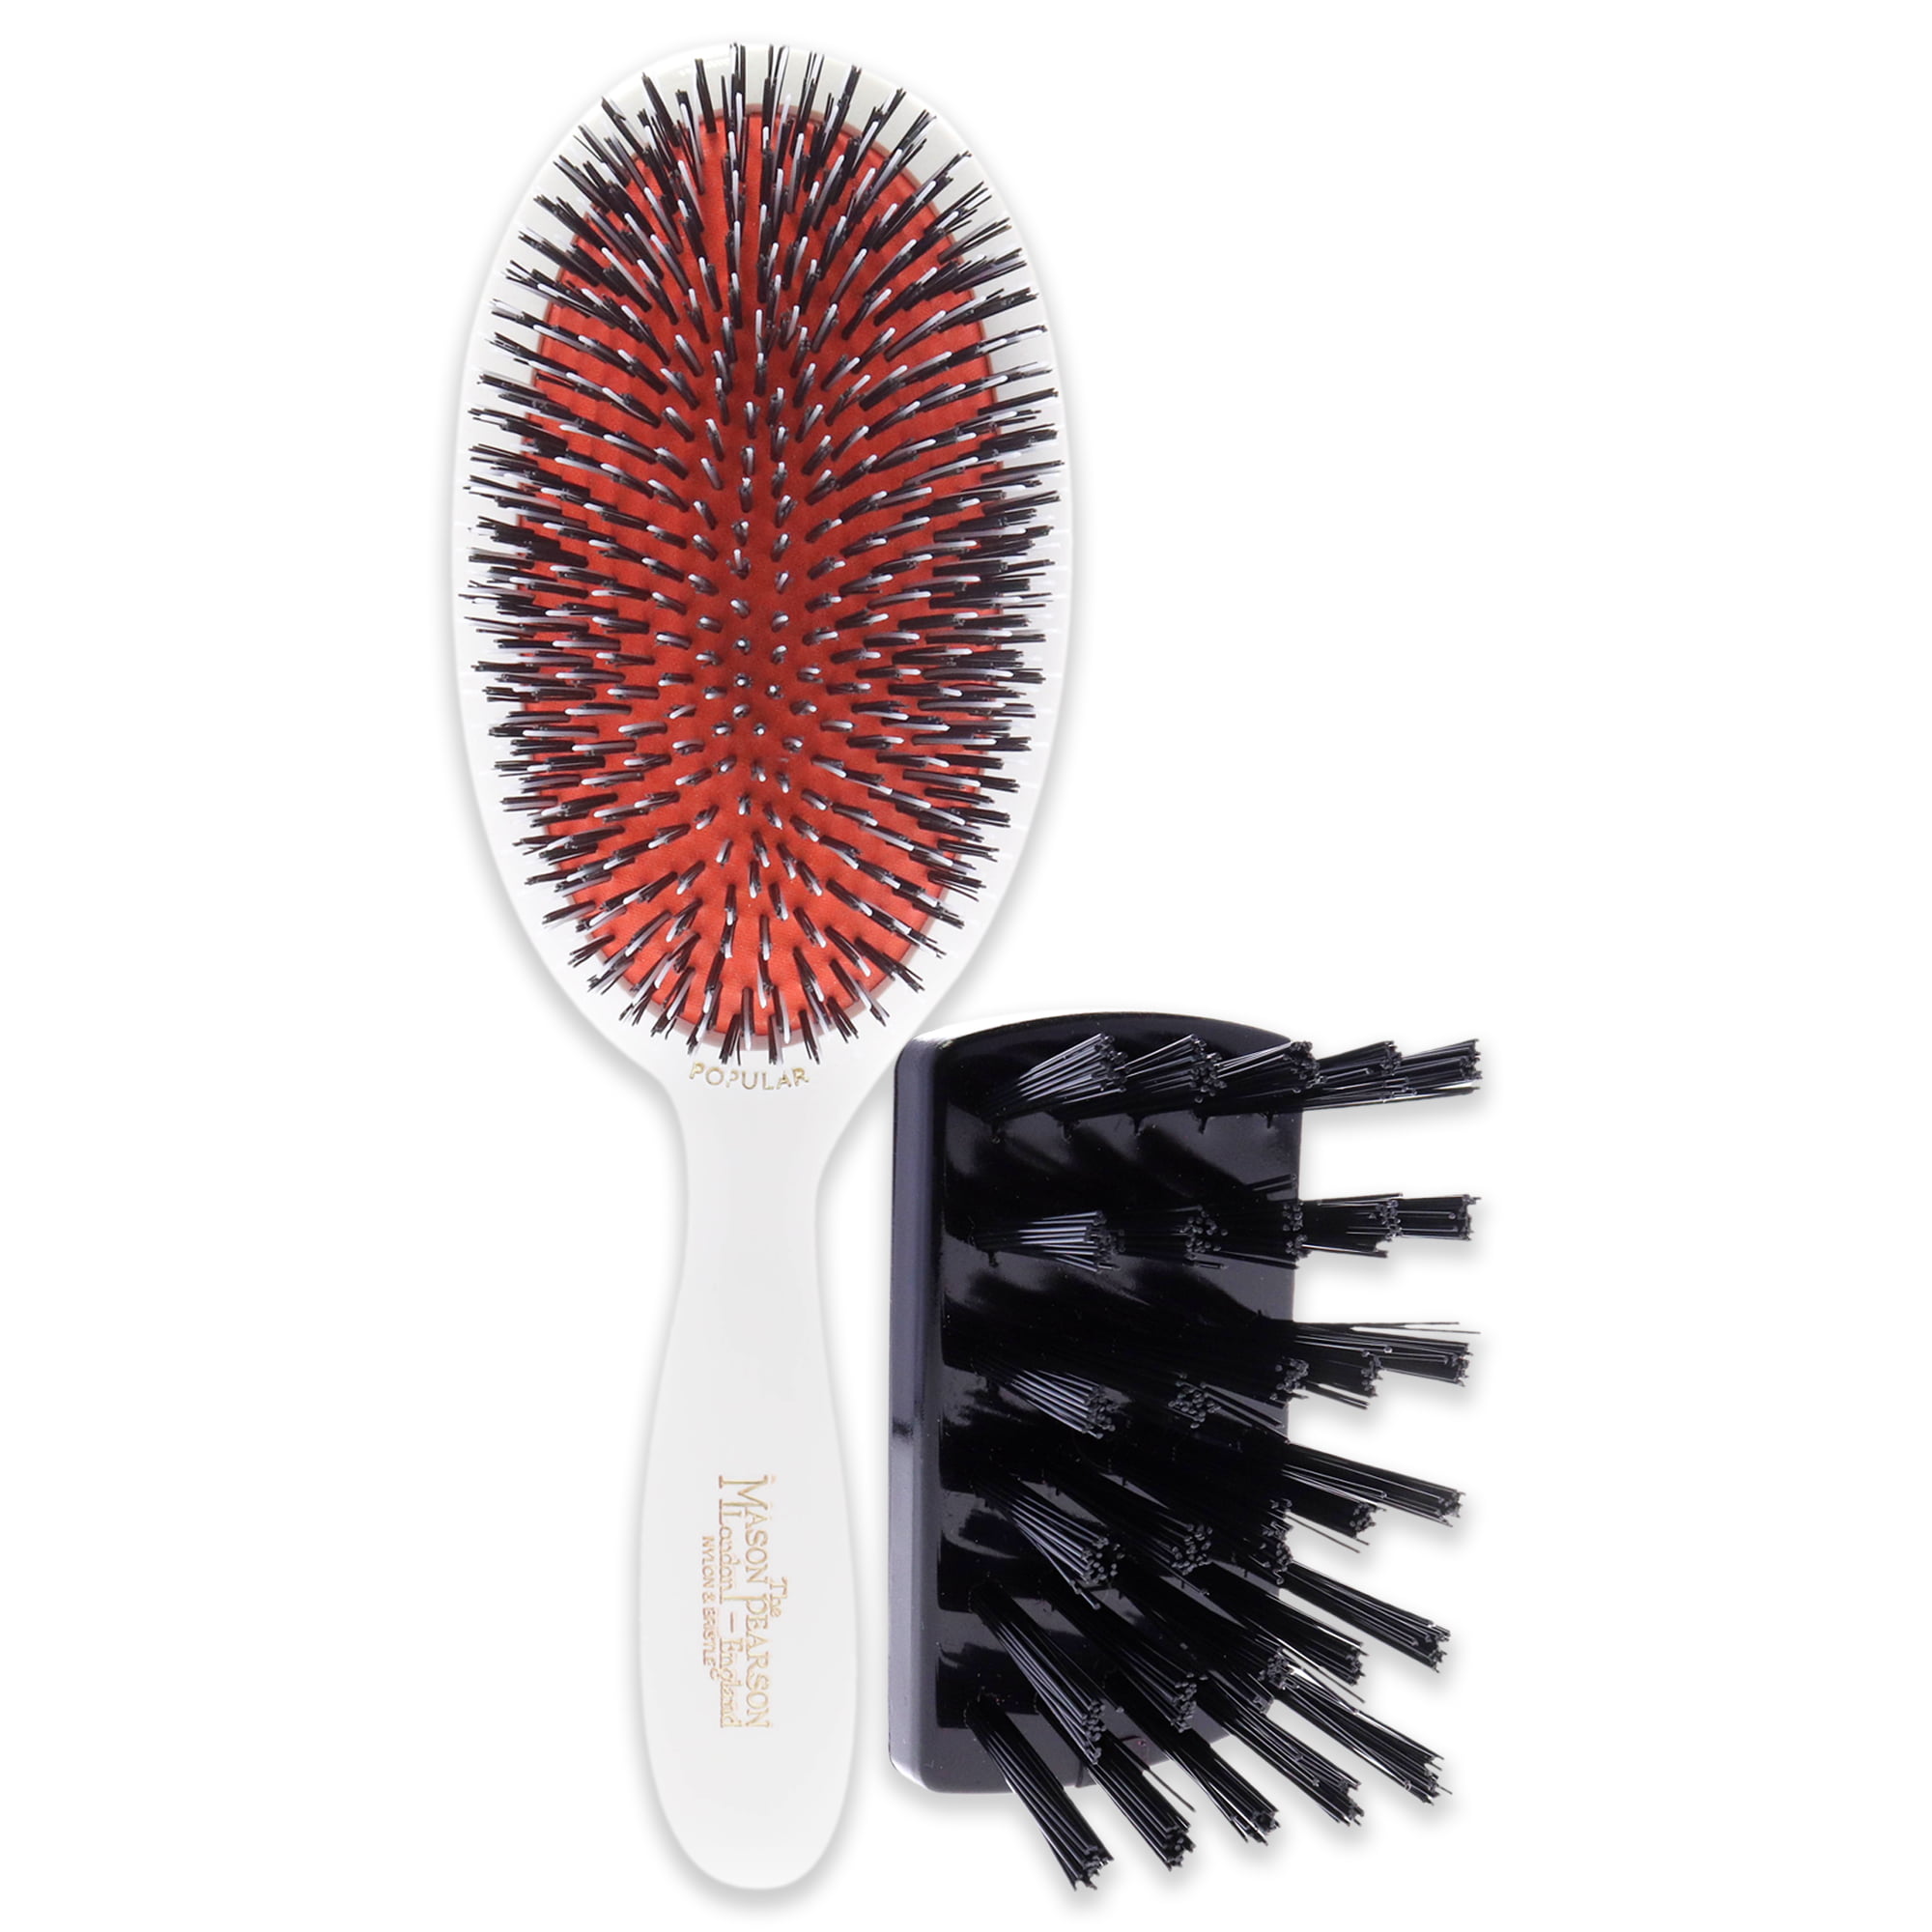 Ivory, and Nylon 2 Brush BN1 Popular Large Cleaning Bristle Hair Mason Brush - Brush and Pc Pearson